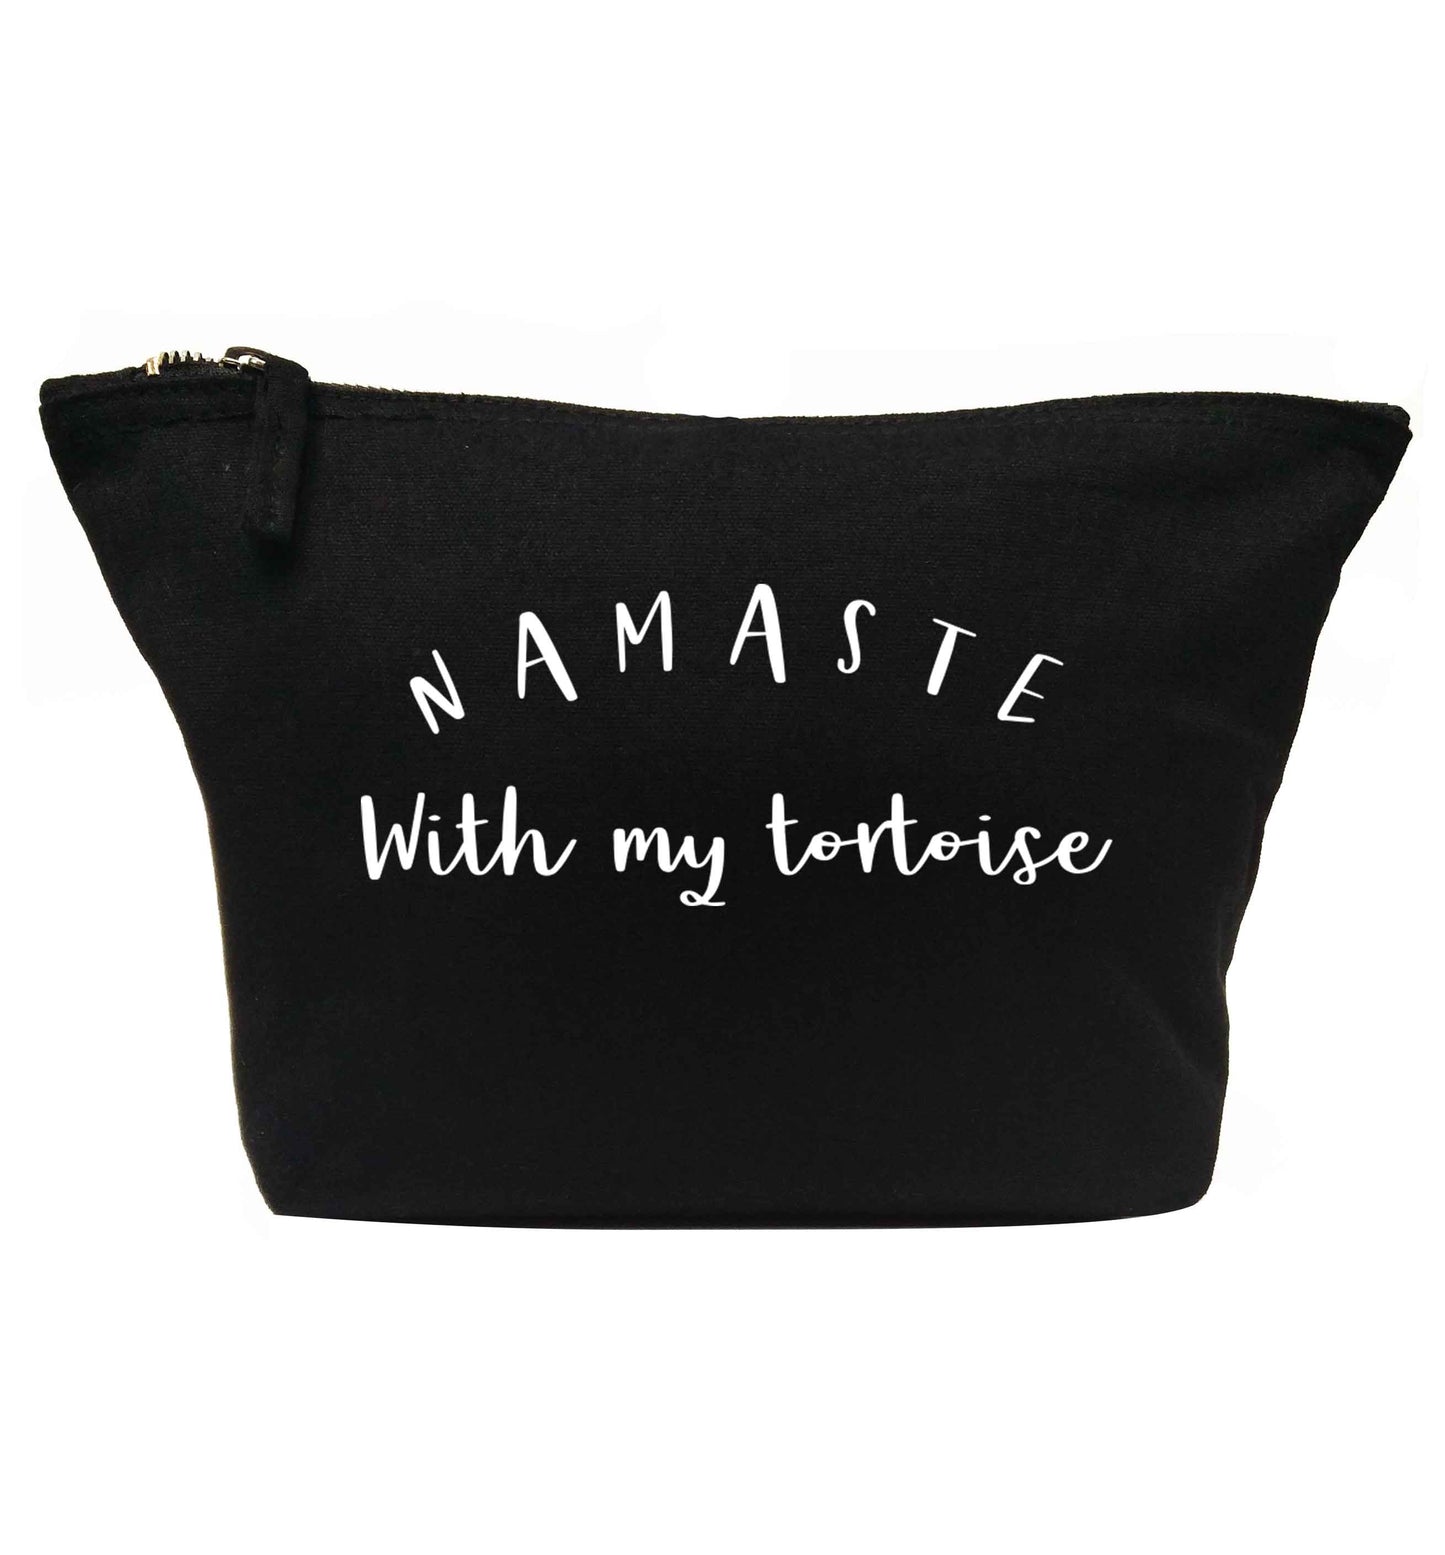 Namaste with my tortoise | makeup / wash bag